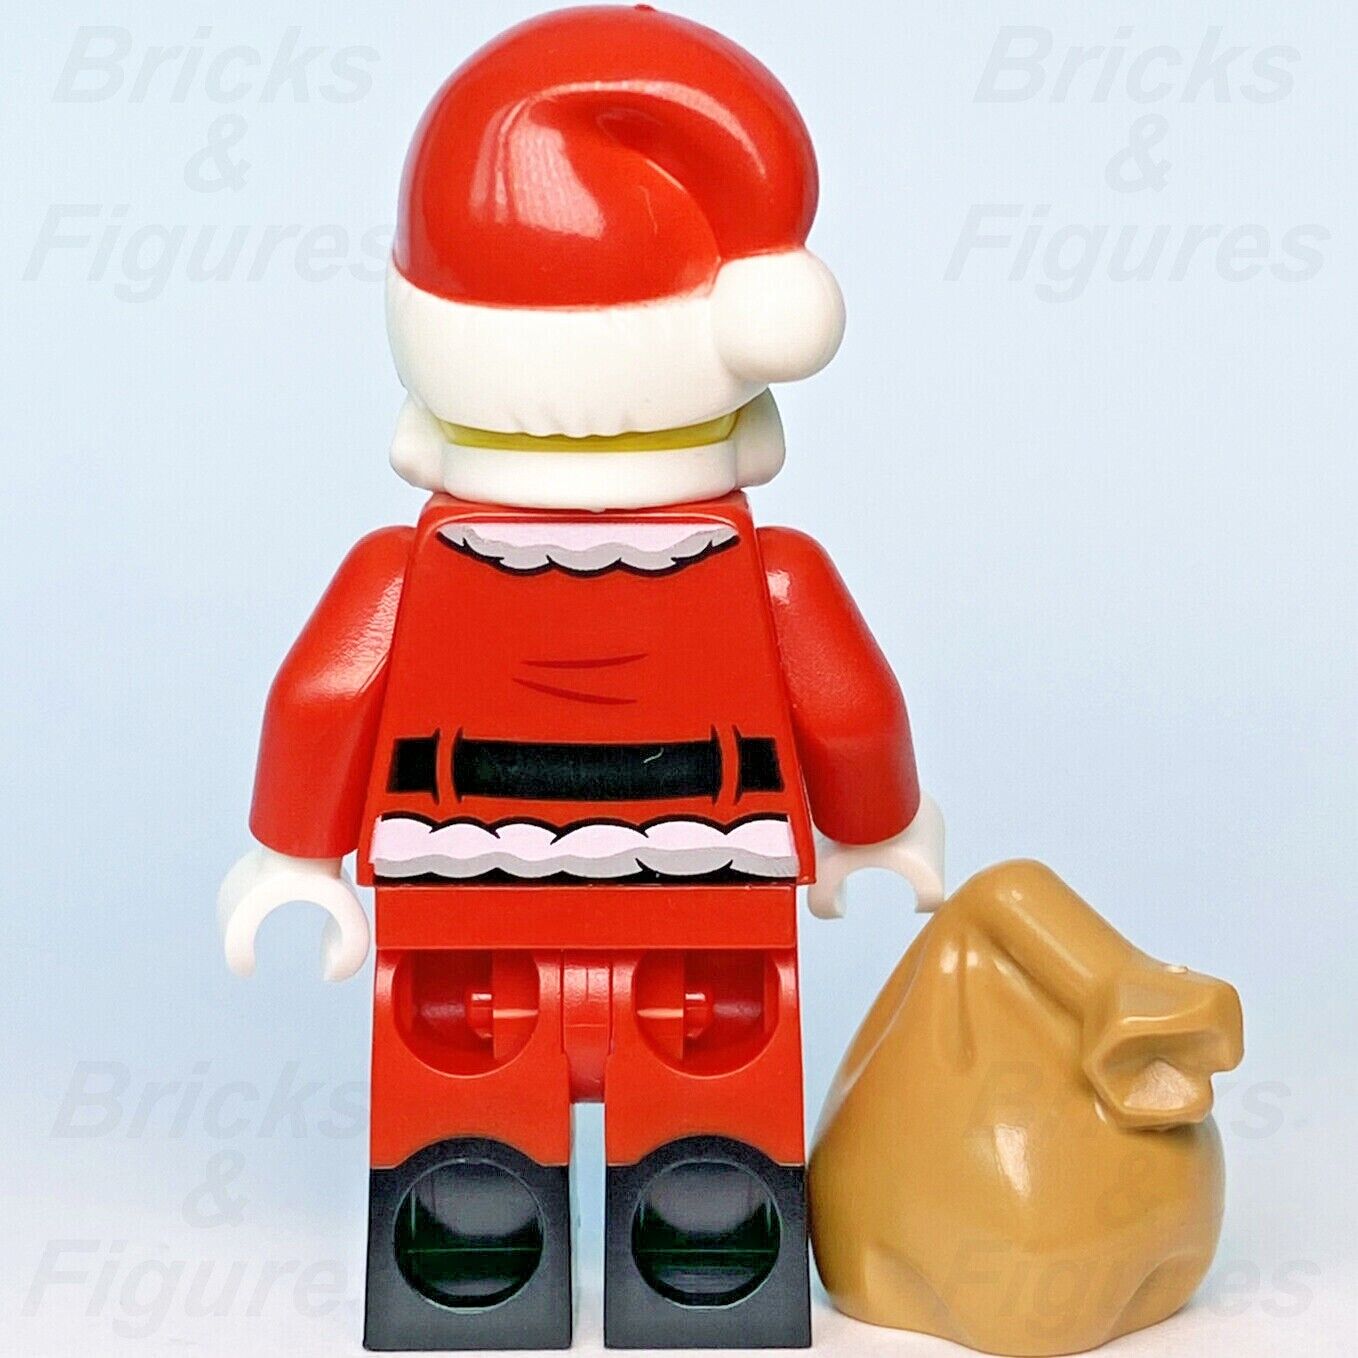 LEGO Santa & Sack Father Christmas Minifigure Holiday & Event 10293 hol253 New - Bricks & Figures